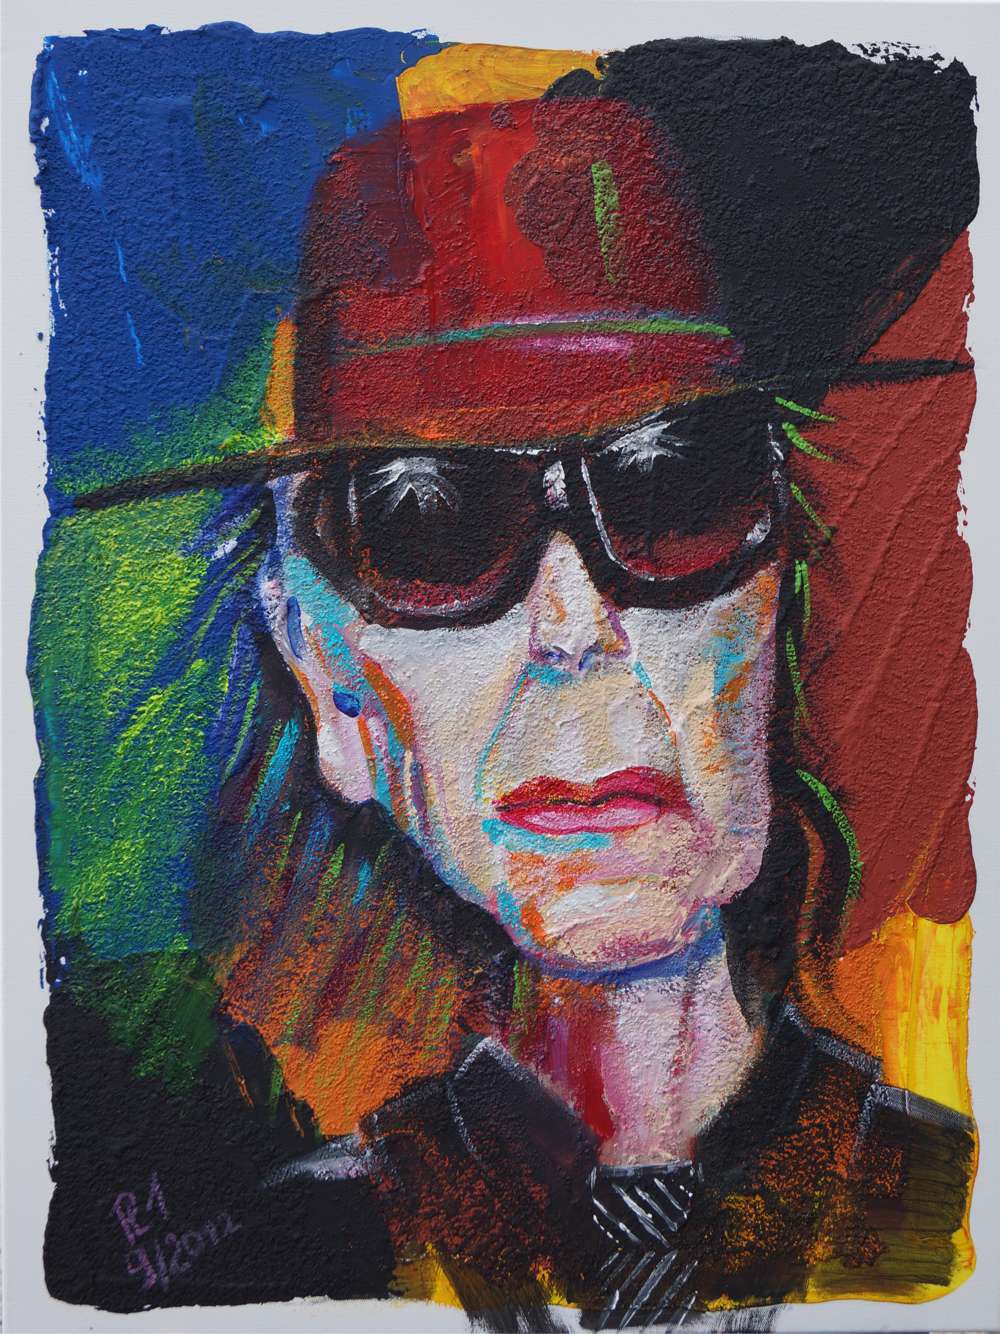 Portrait Udo Lindenberg in Acryl